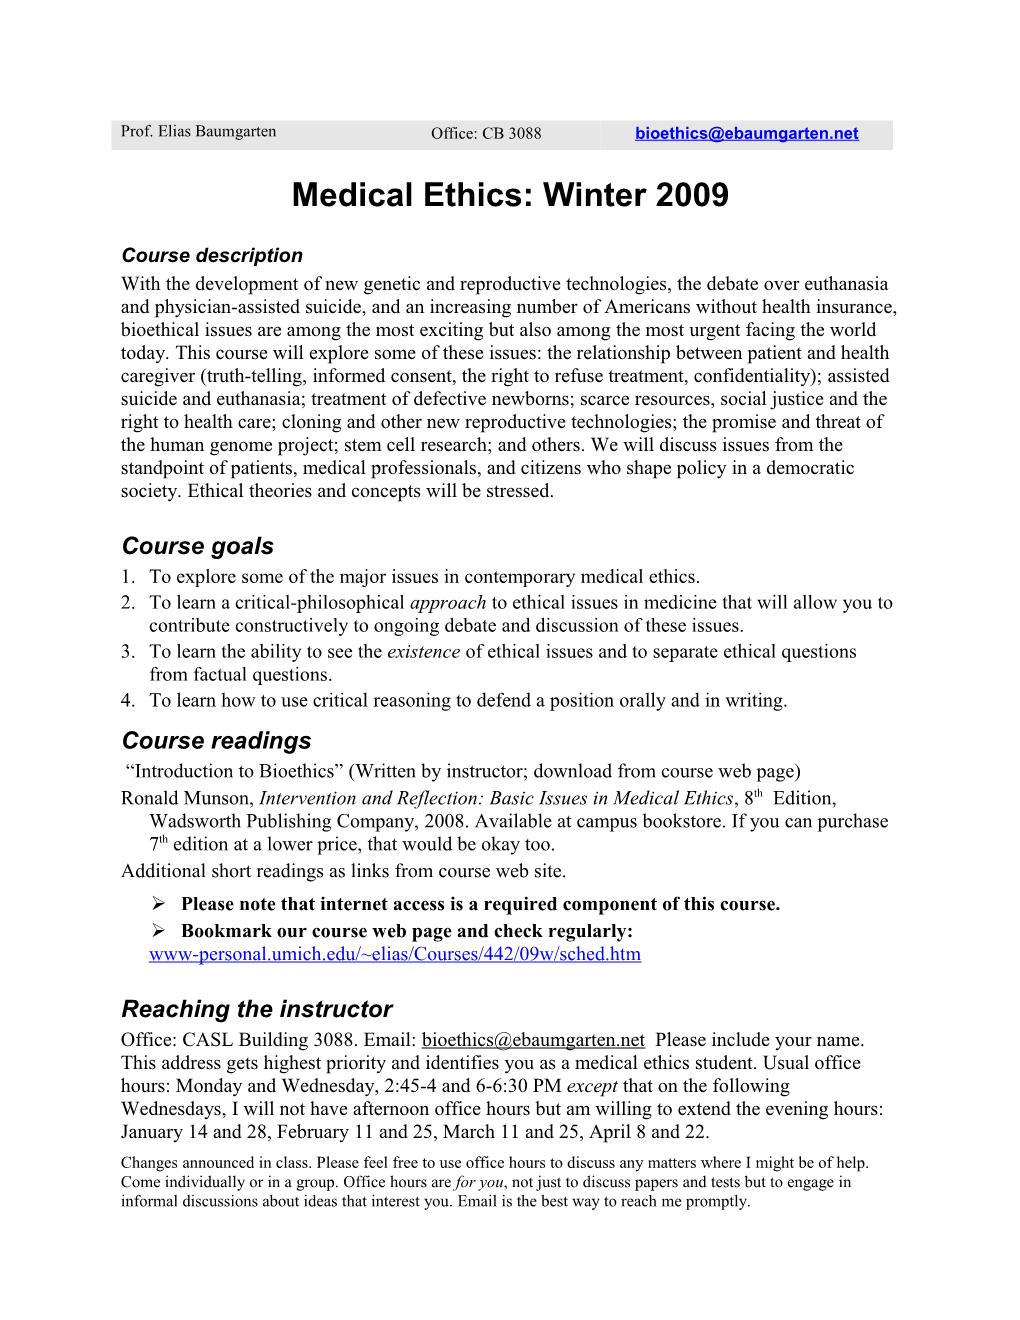 Medical Ethics Syllabus Fall 2007